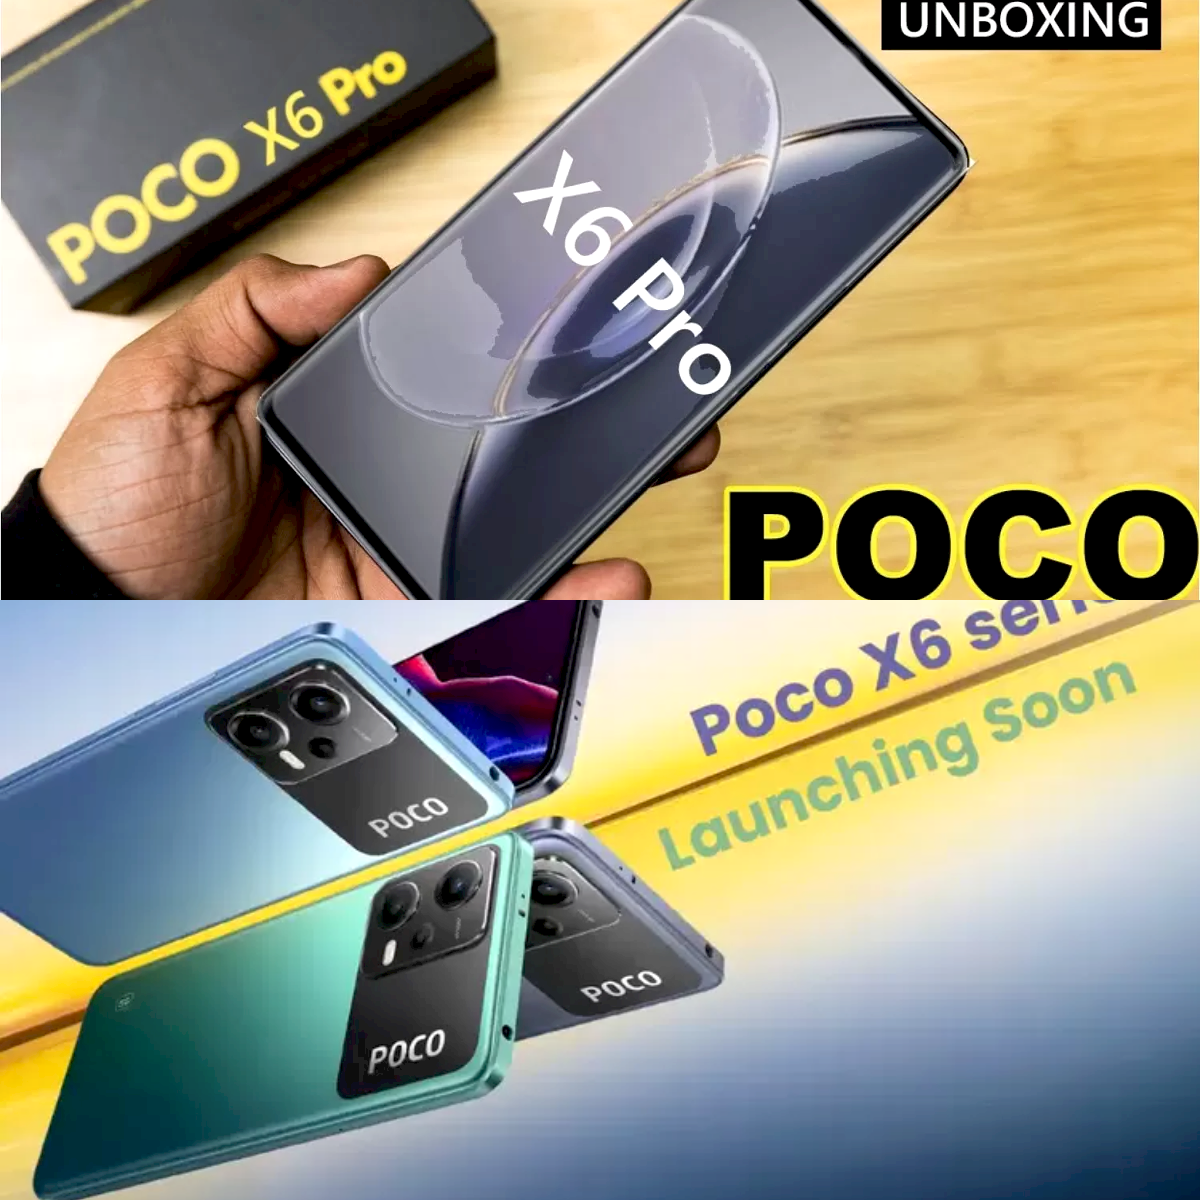 Spesifikasi Poco F6 Pro: Terobosan Baru Smartphone dengan Teknologi Super  Cepat dan Kamera Mumpuni! - Catatan Fakta